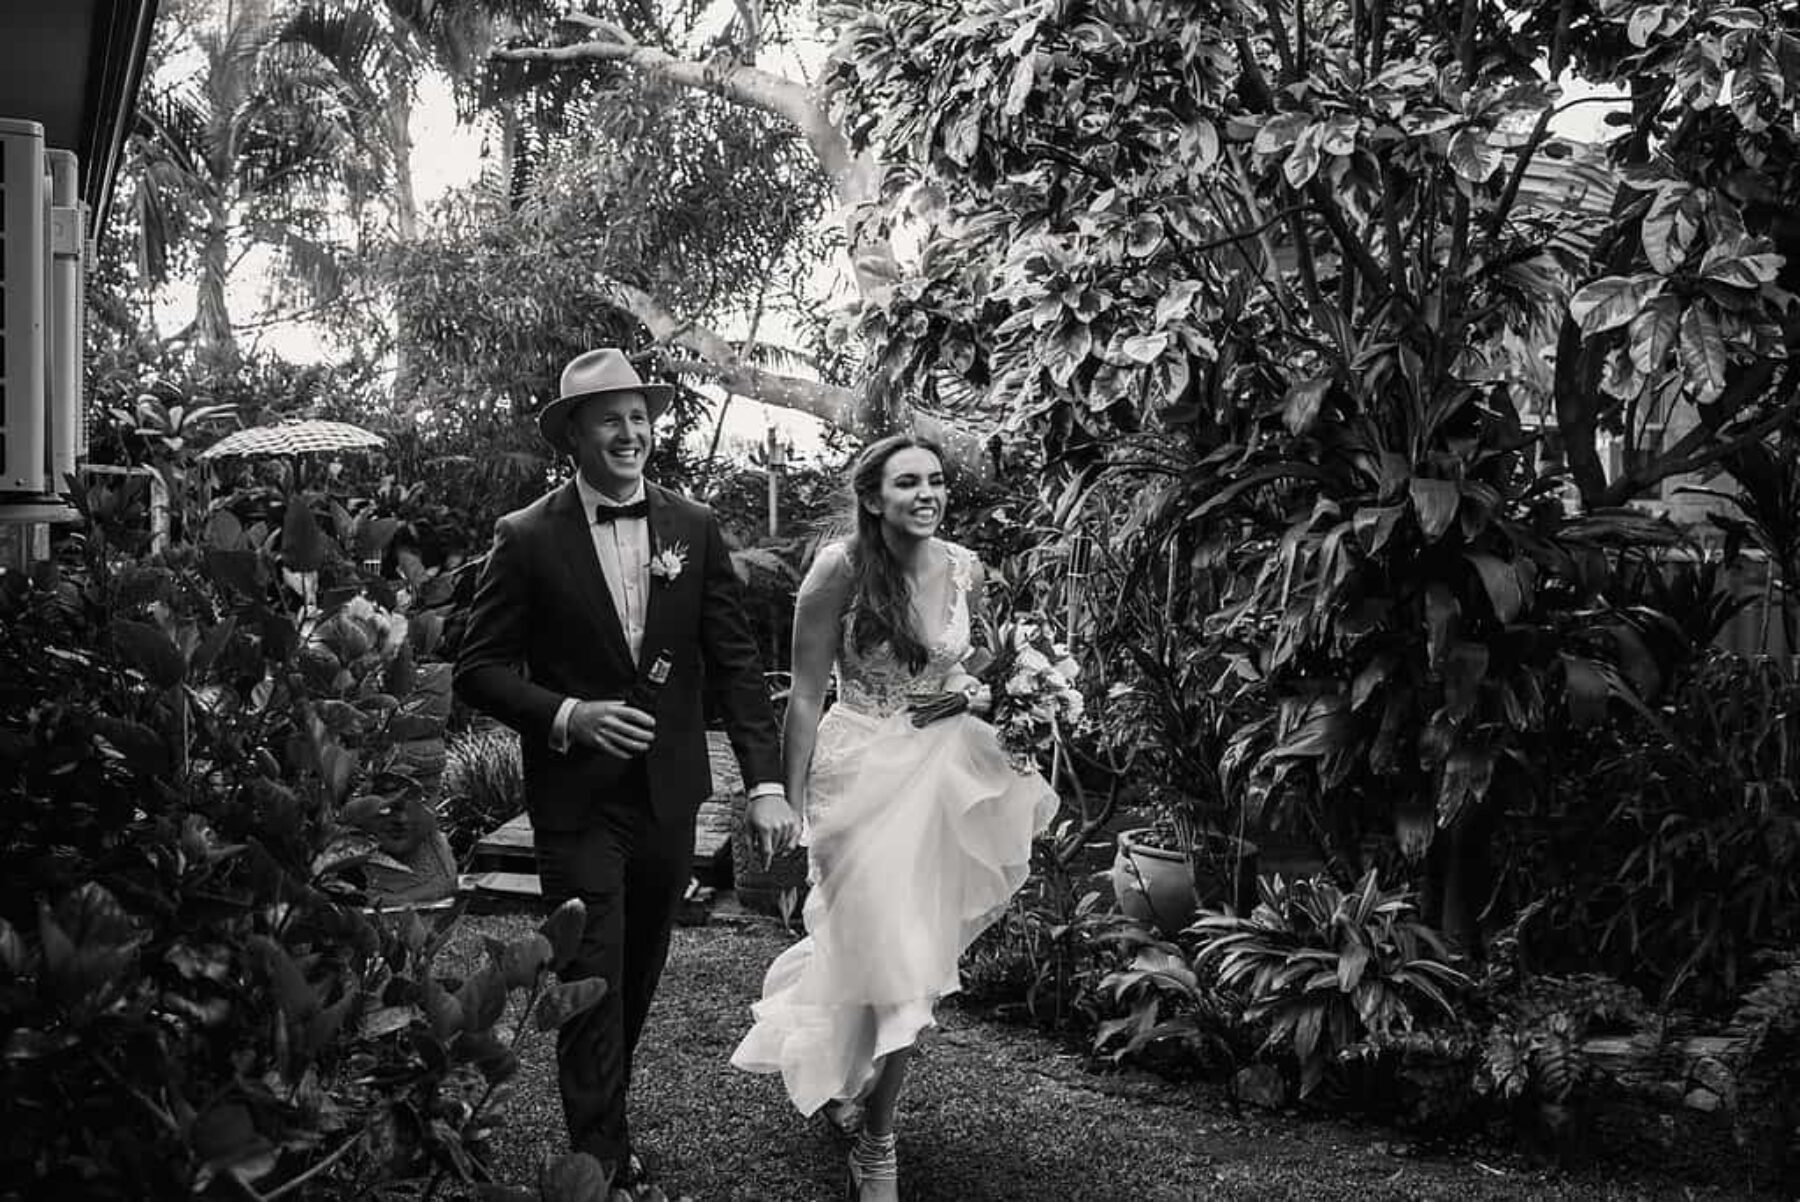 Modern backyard wedding in Perth WA / Photography by CJ Williams